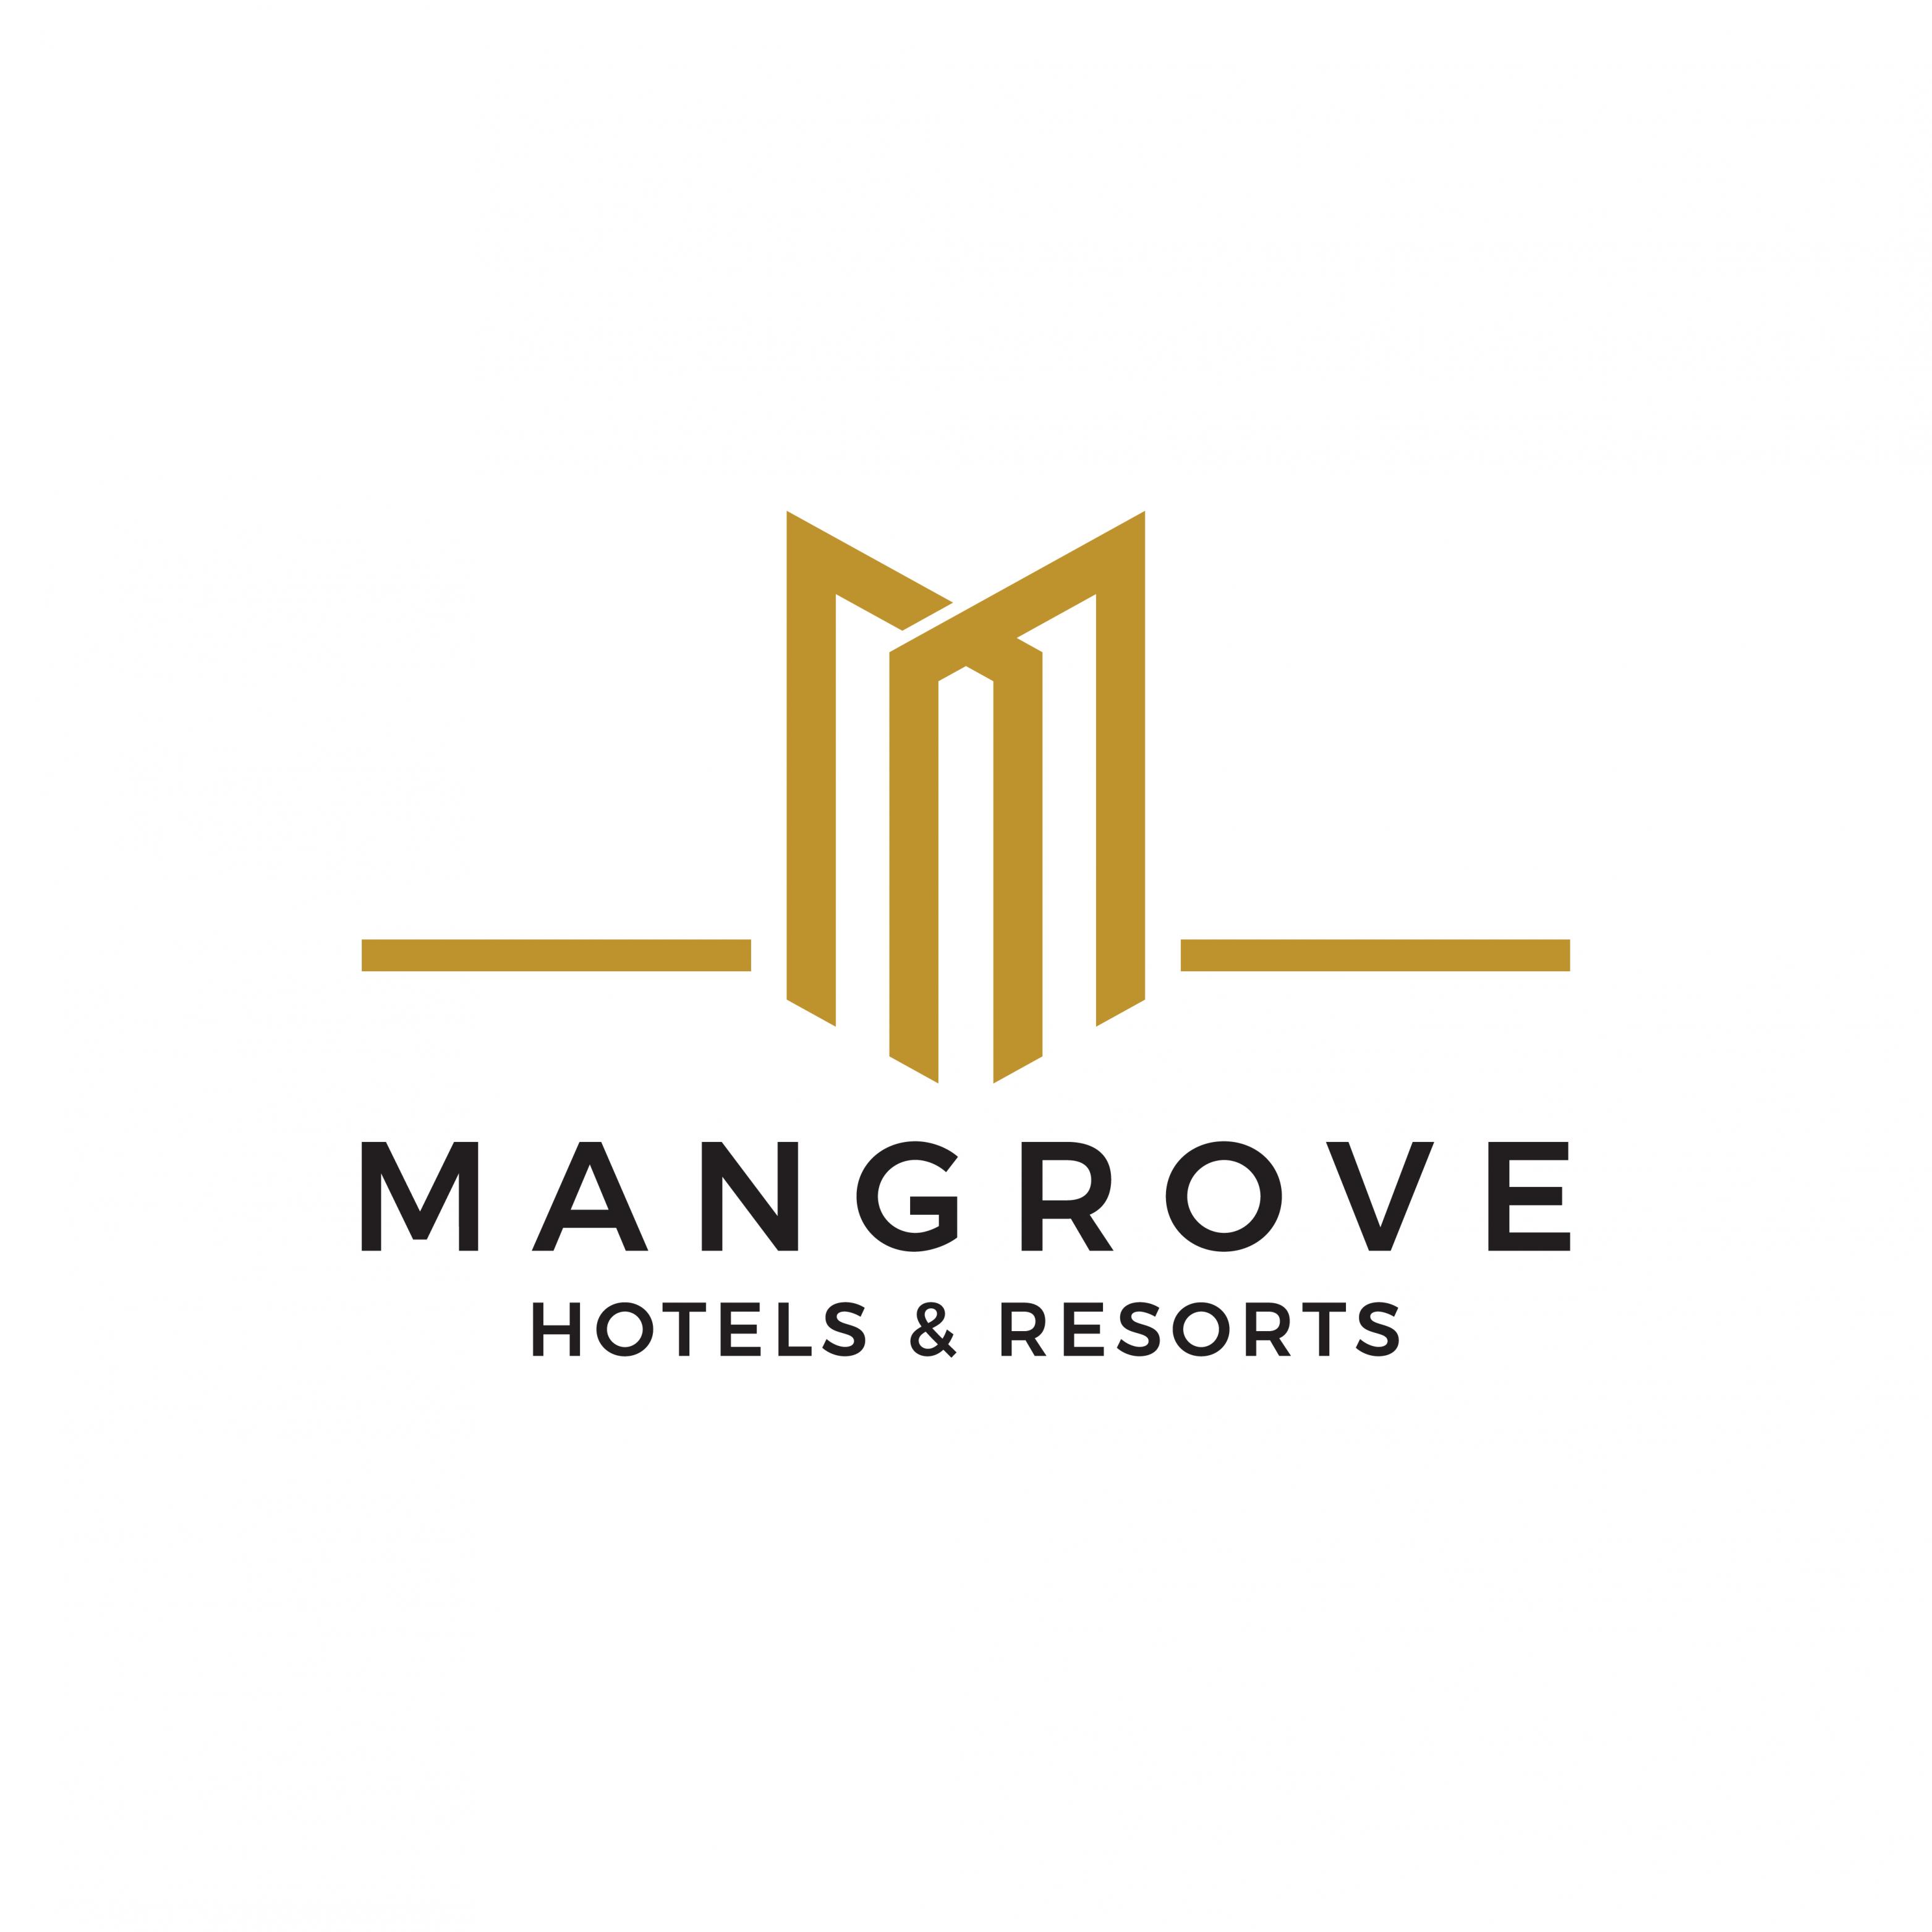 Mangrove Hotels & Resorts